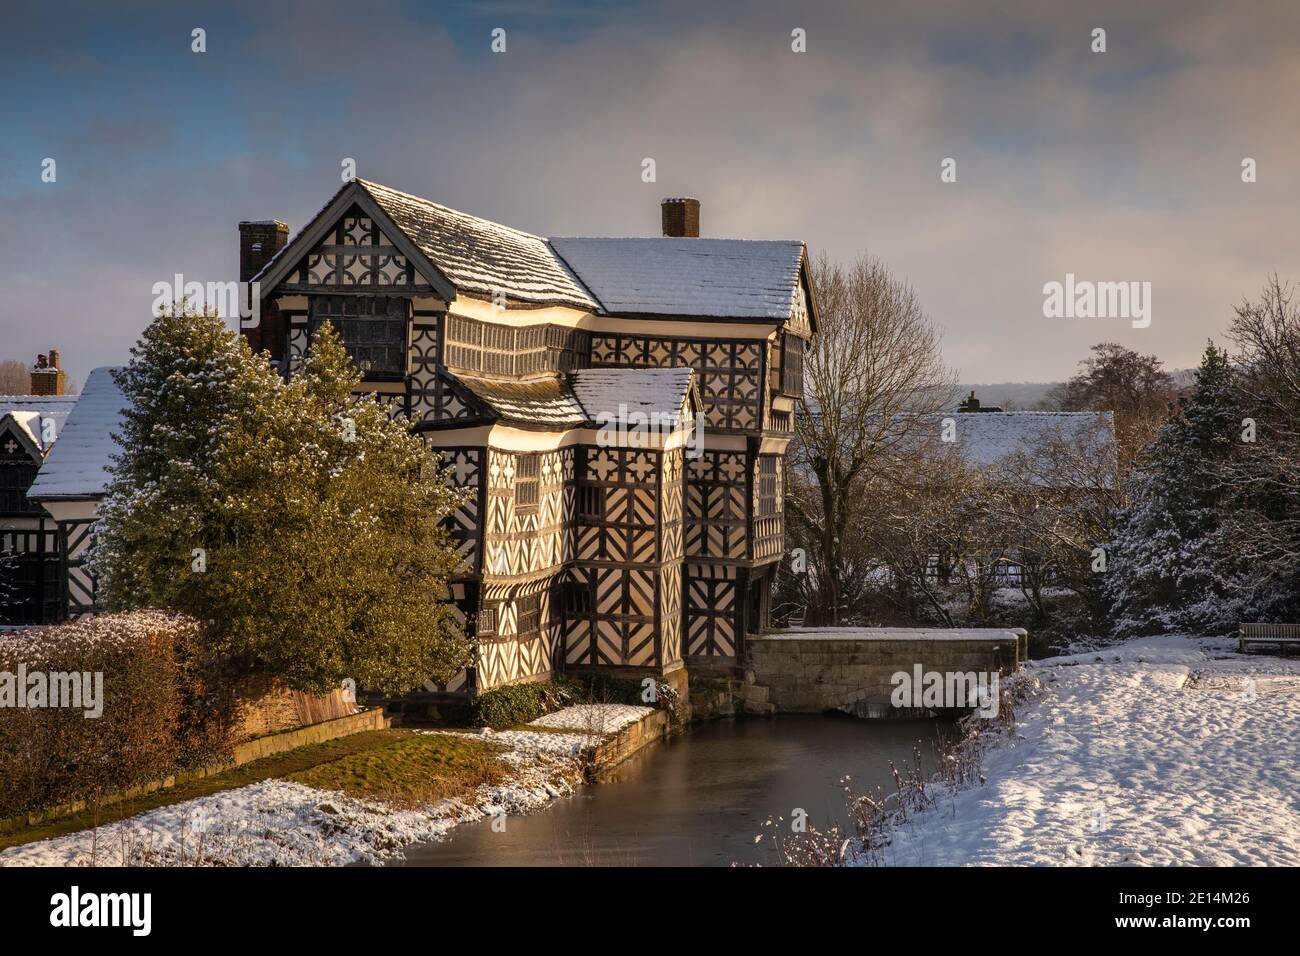 Großbritannien, England, Cheshire, Scholar Green, Little Moreton Hall, Fachwerkhaus Tudor Farmhouse, im Winter Stockfoto